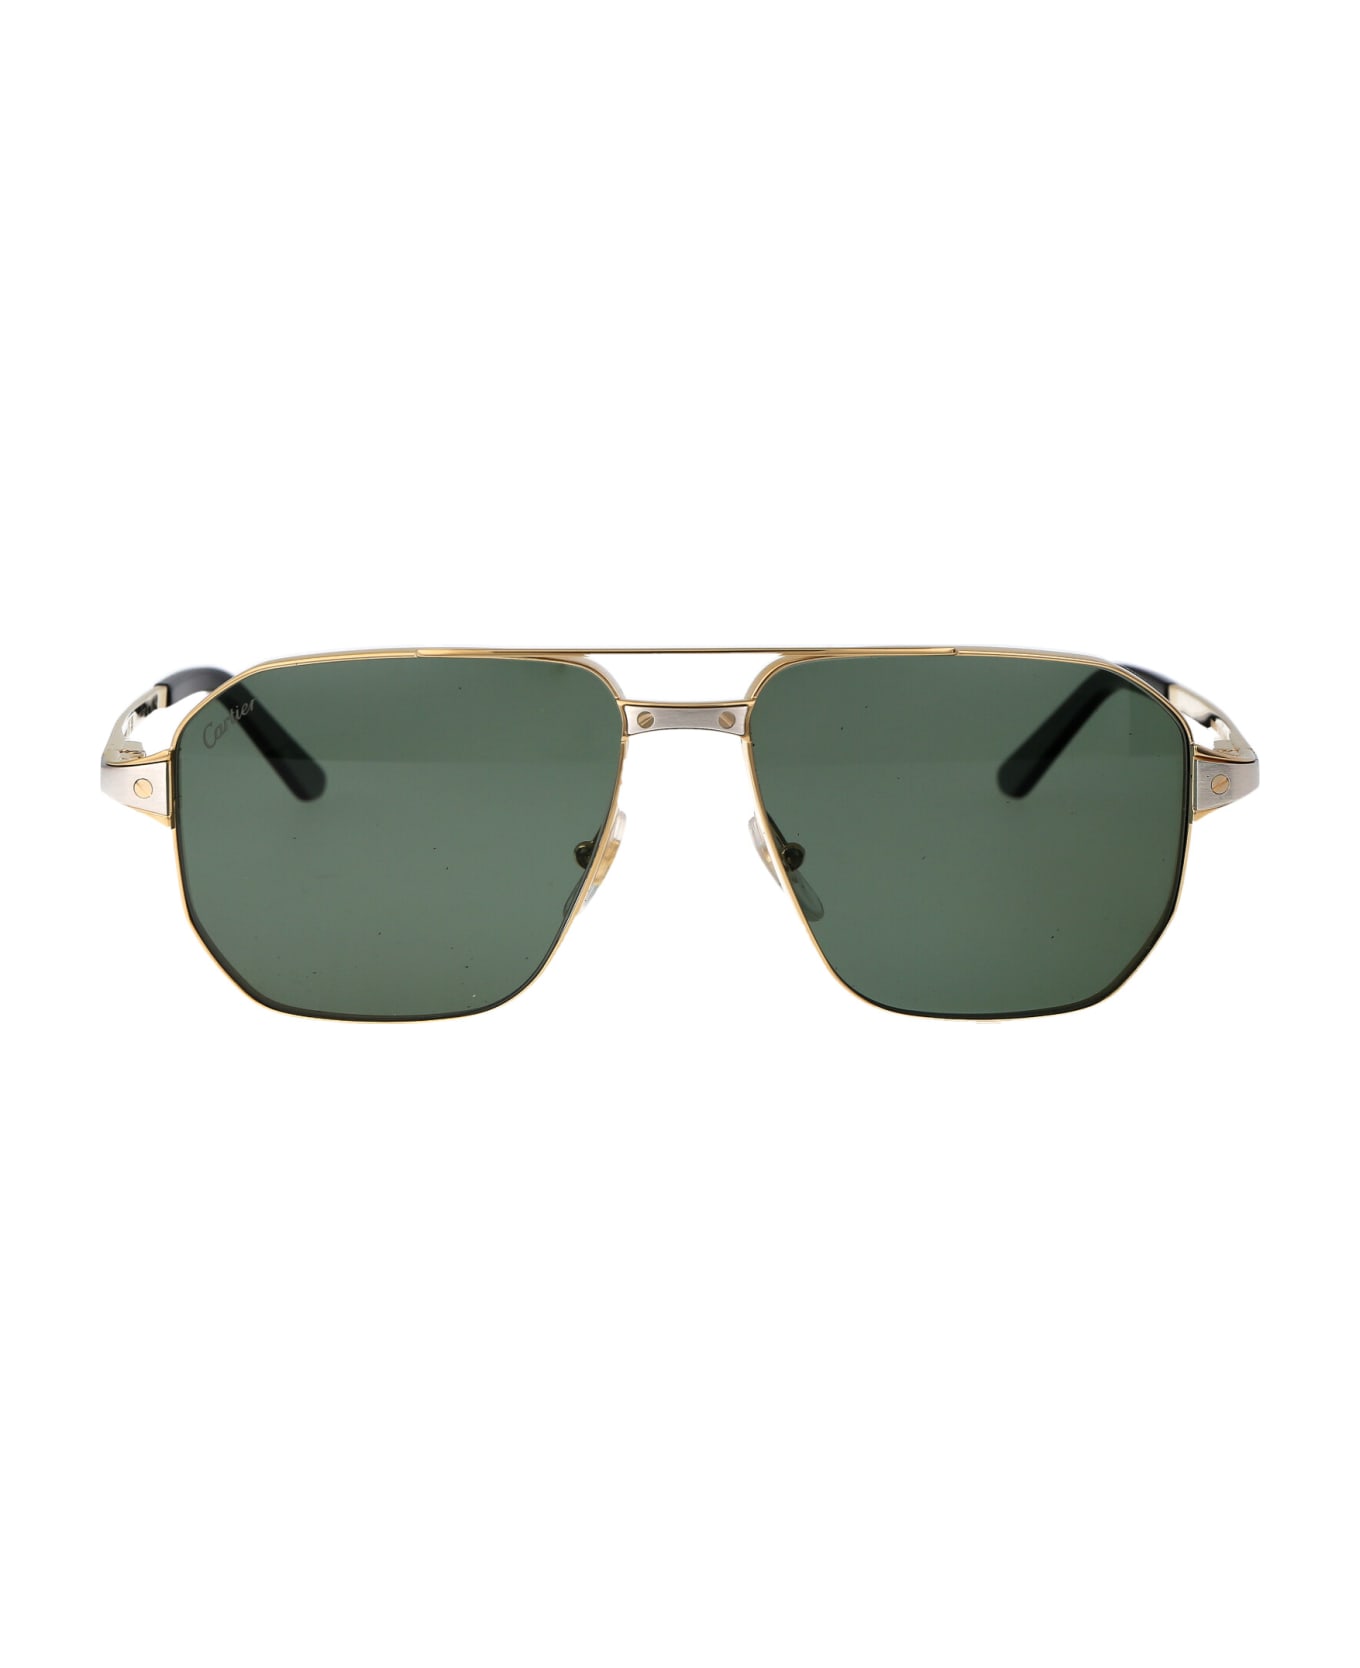 Cartier Eyewear Ct0424s Sunglasses - 002 GOLD GOLD GREEN サングラス